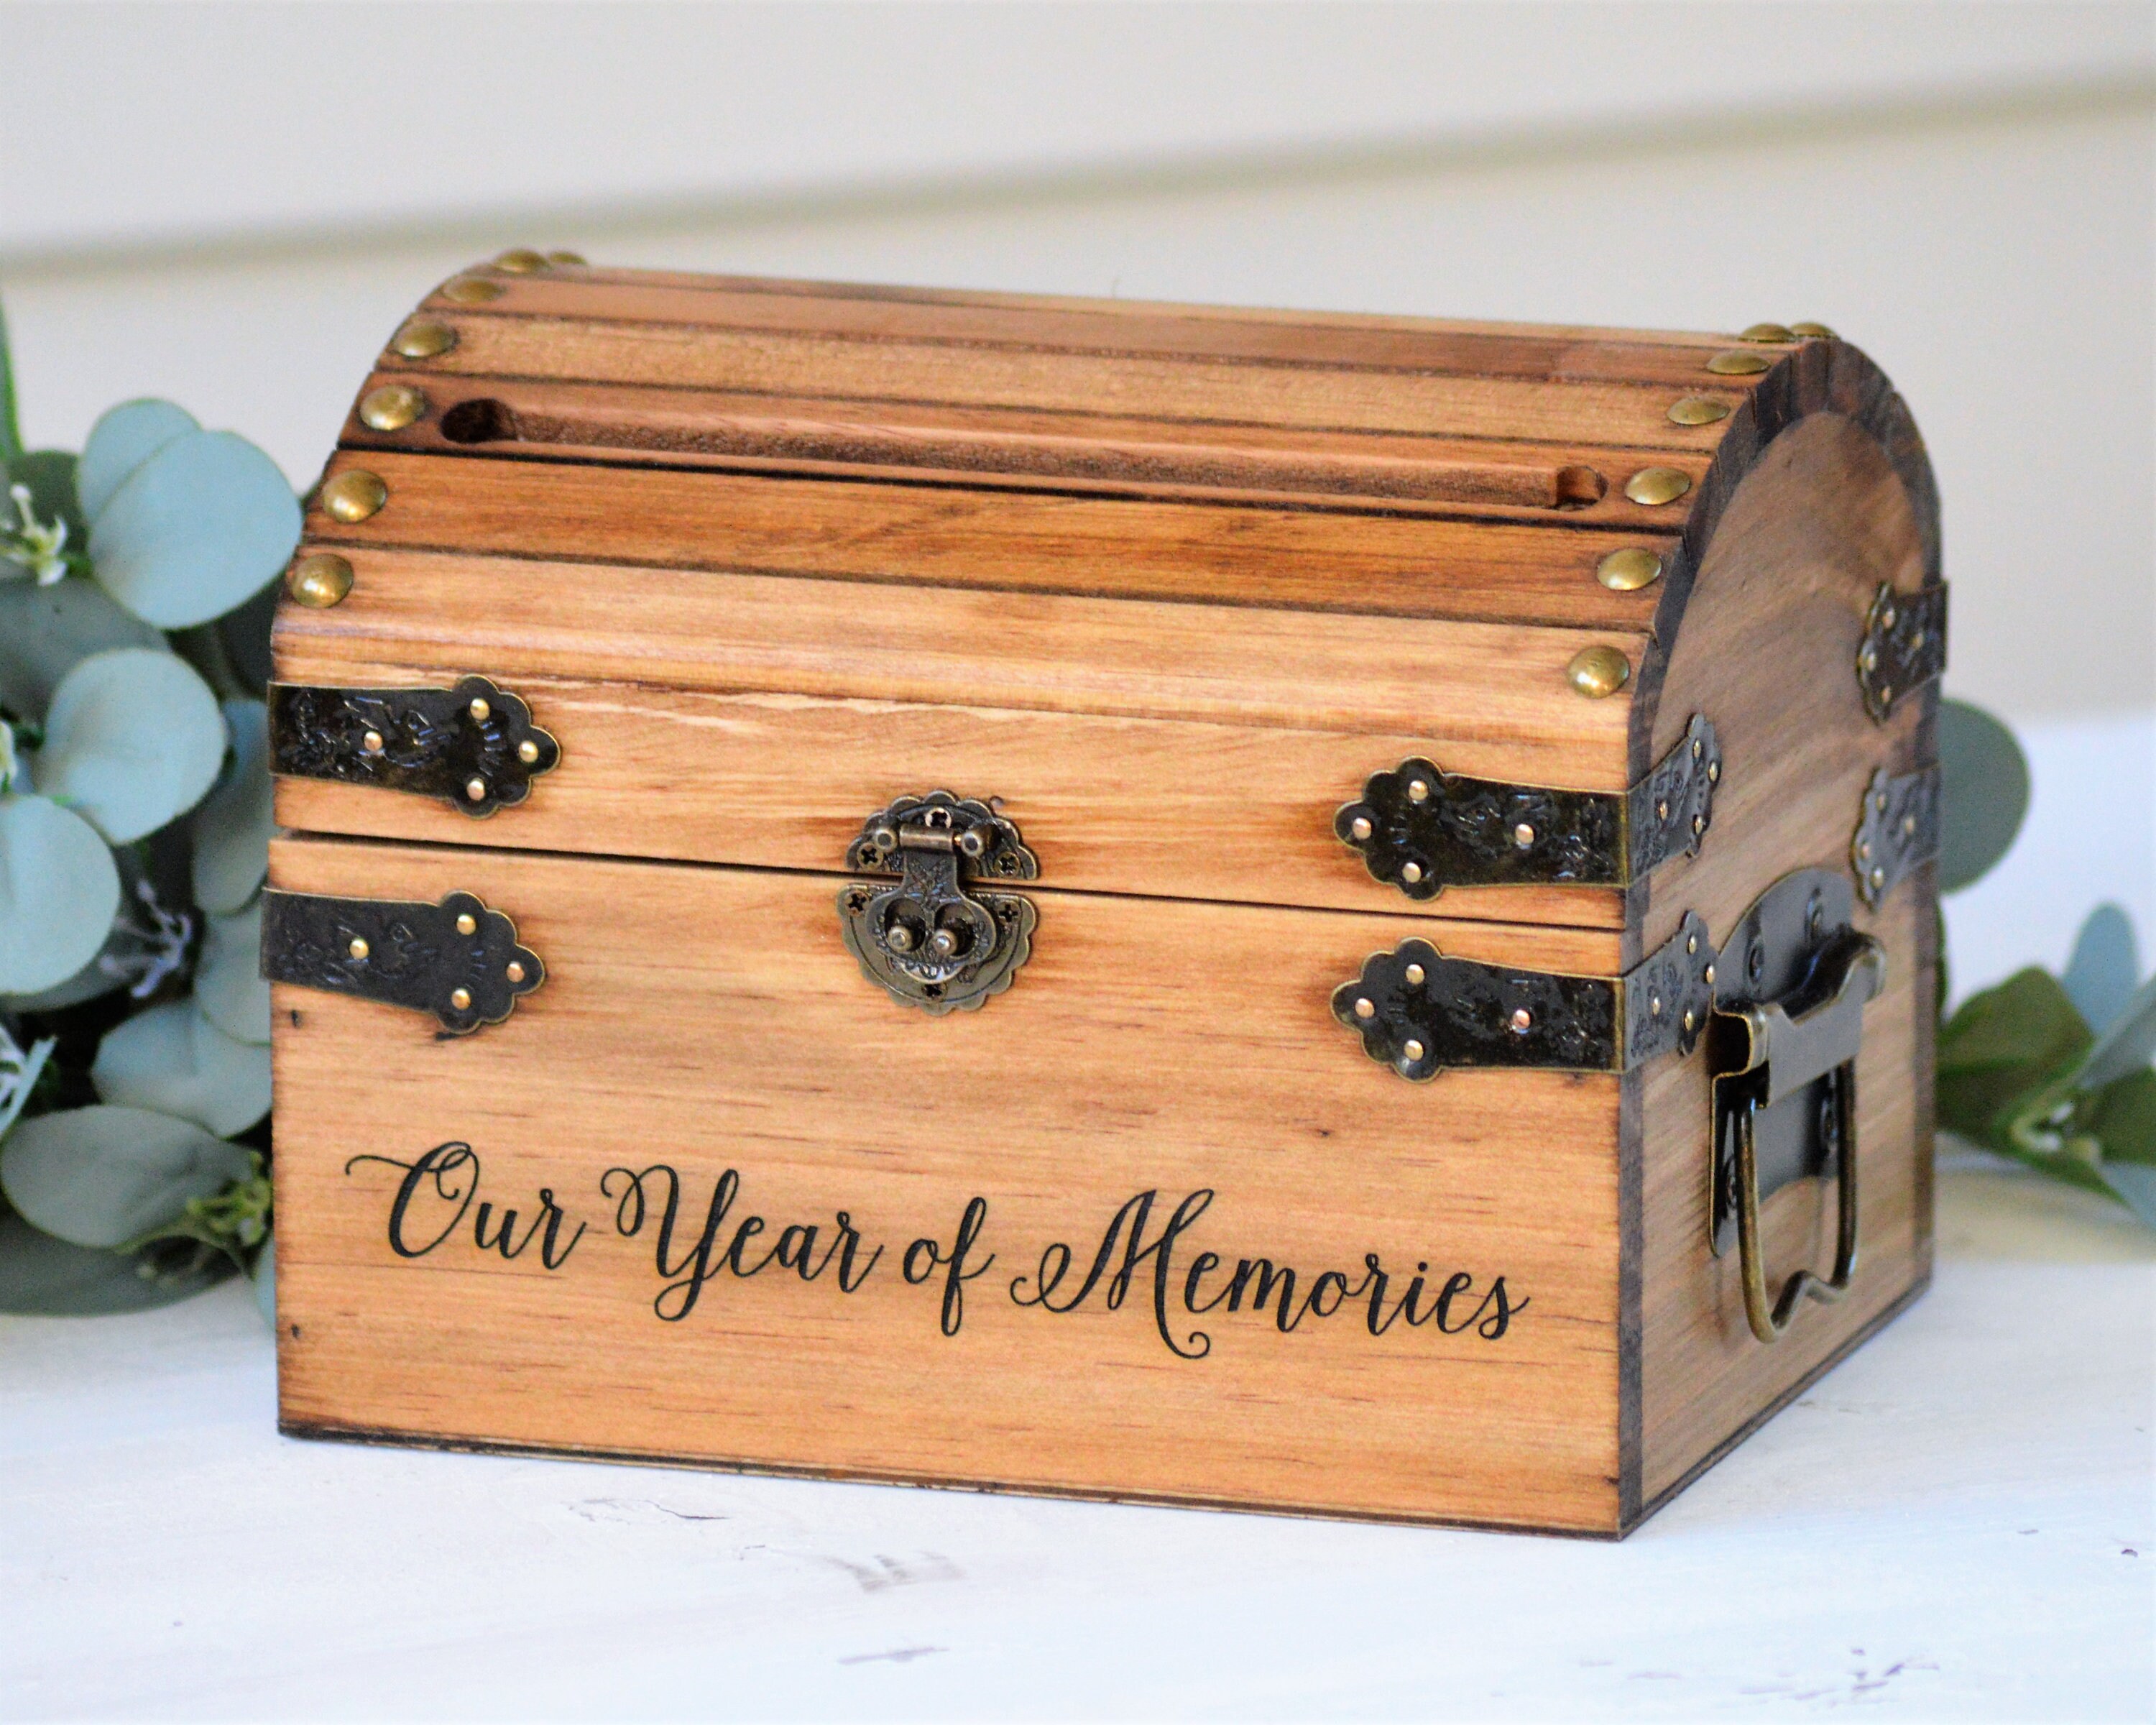 Vintage memory Chest,Wooden Chest, Keepsake Box, Memo… - Gem